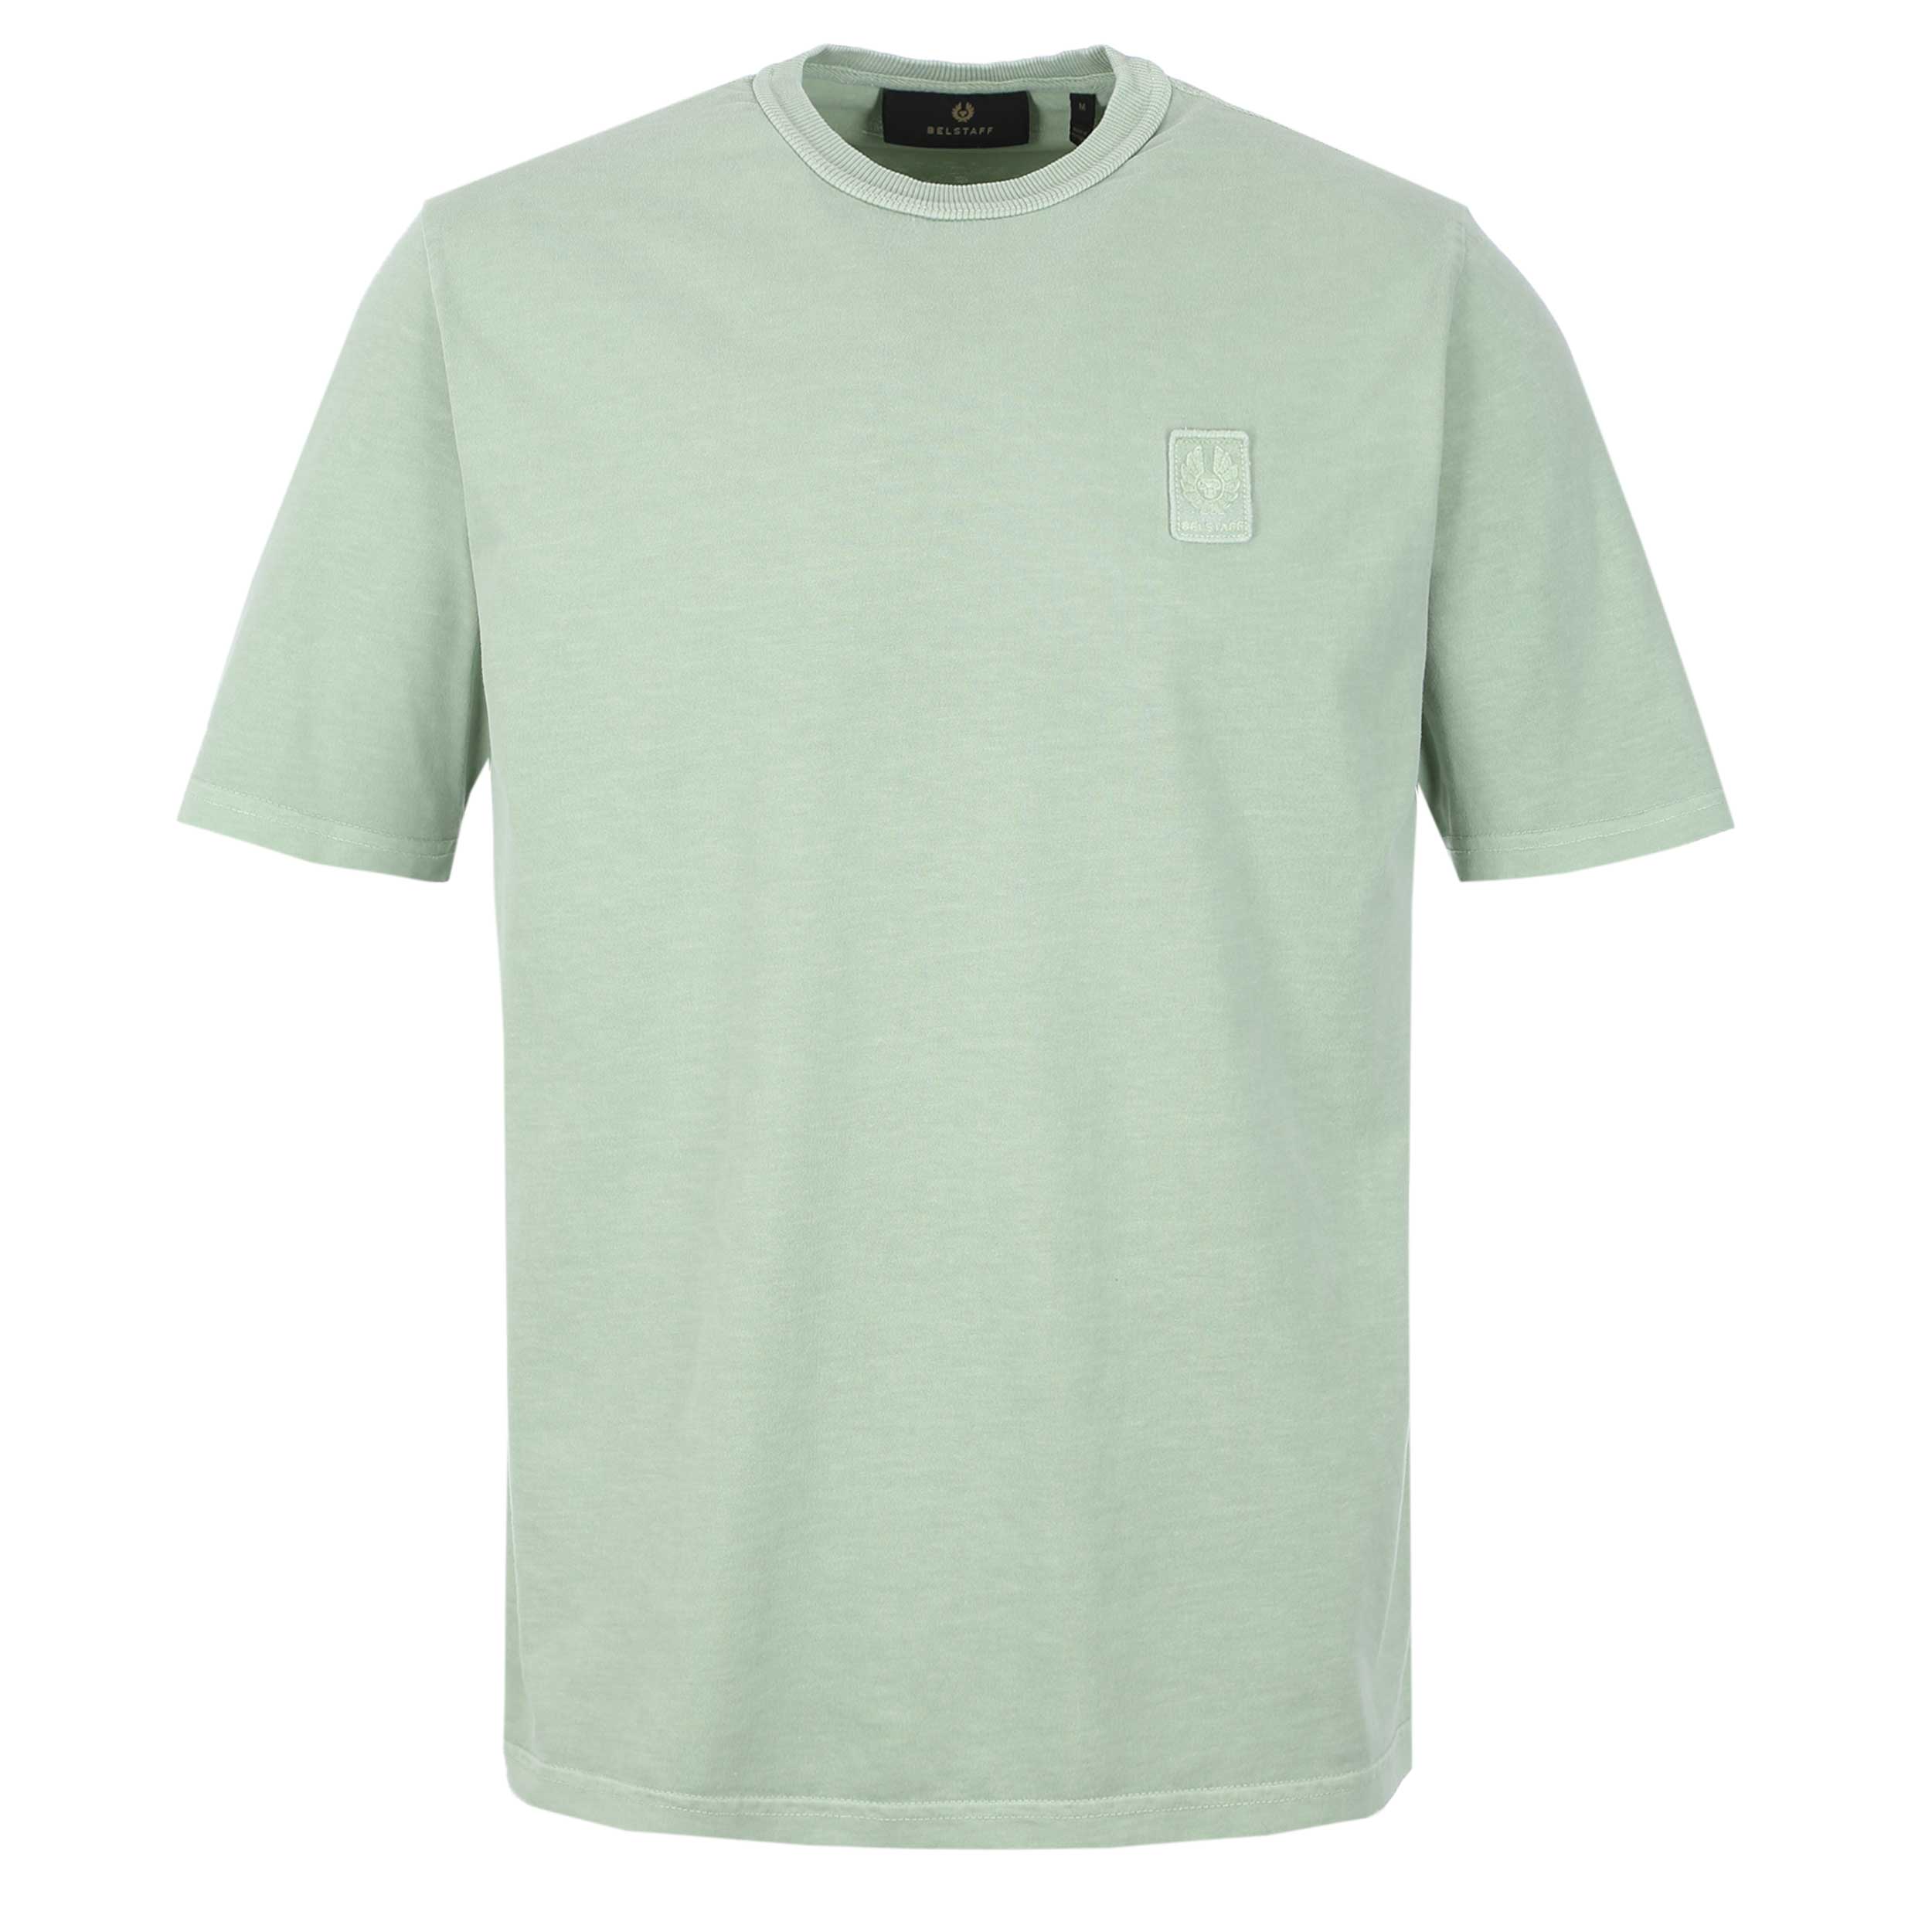 Belstaff Mineral Outliner T-Shirt in Echo Green